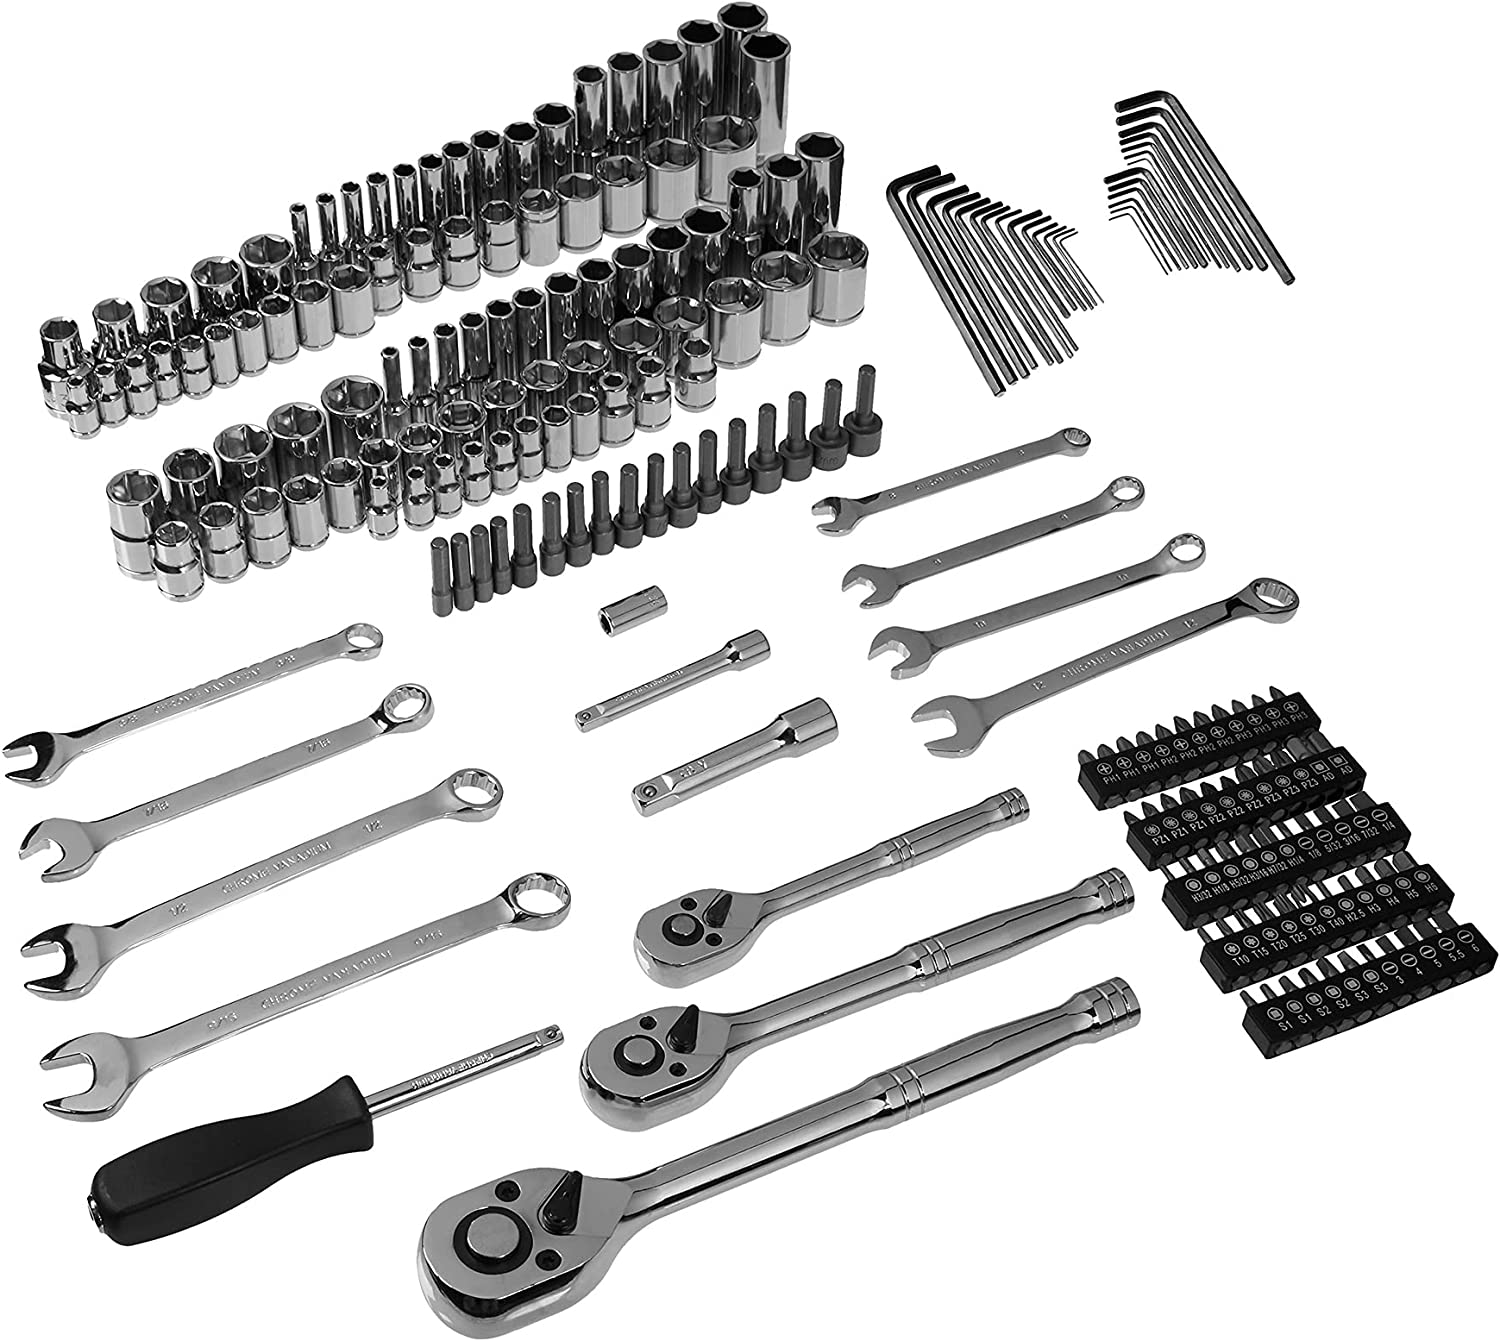 Basics Mechanic's Tool Socket Set With Case, 123-Piece